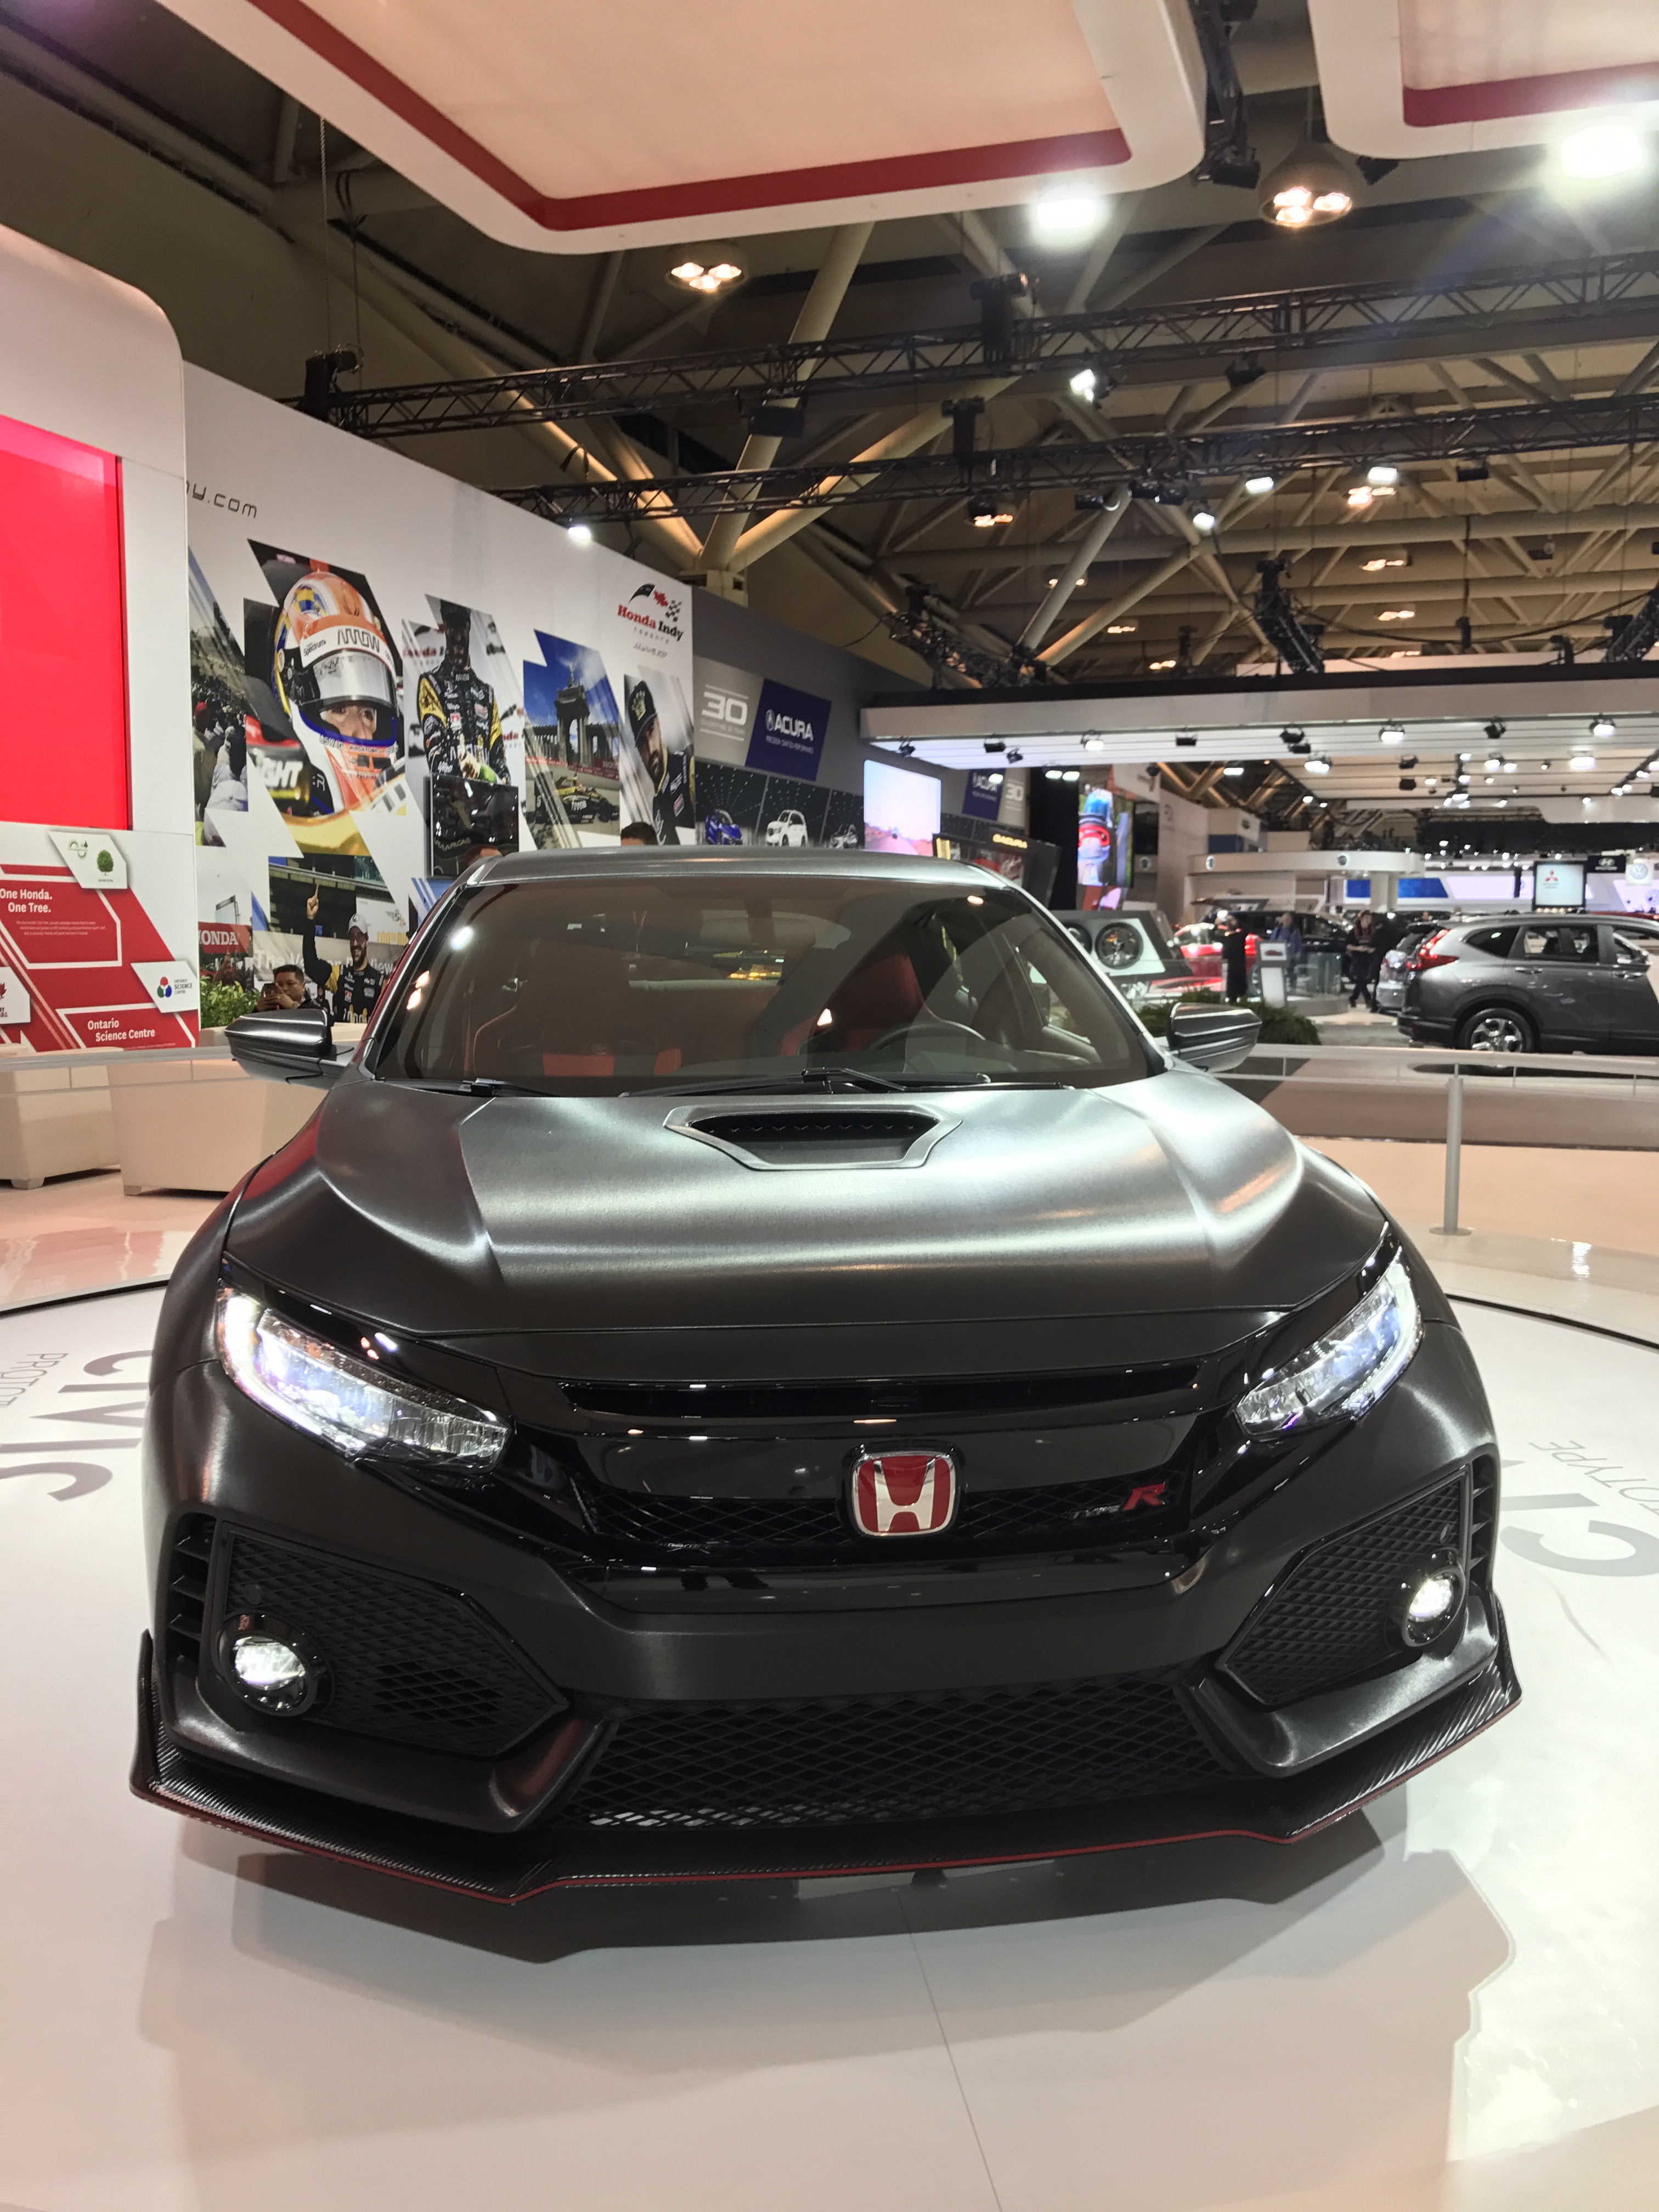 Honda Civic Type R Prototype - Canadian International Autoshow #CIAS2017